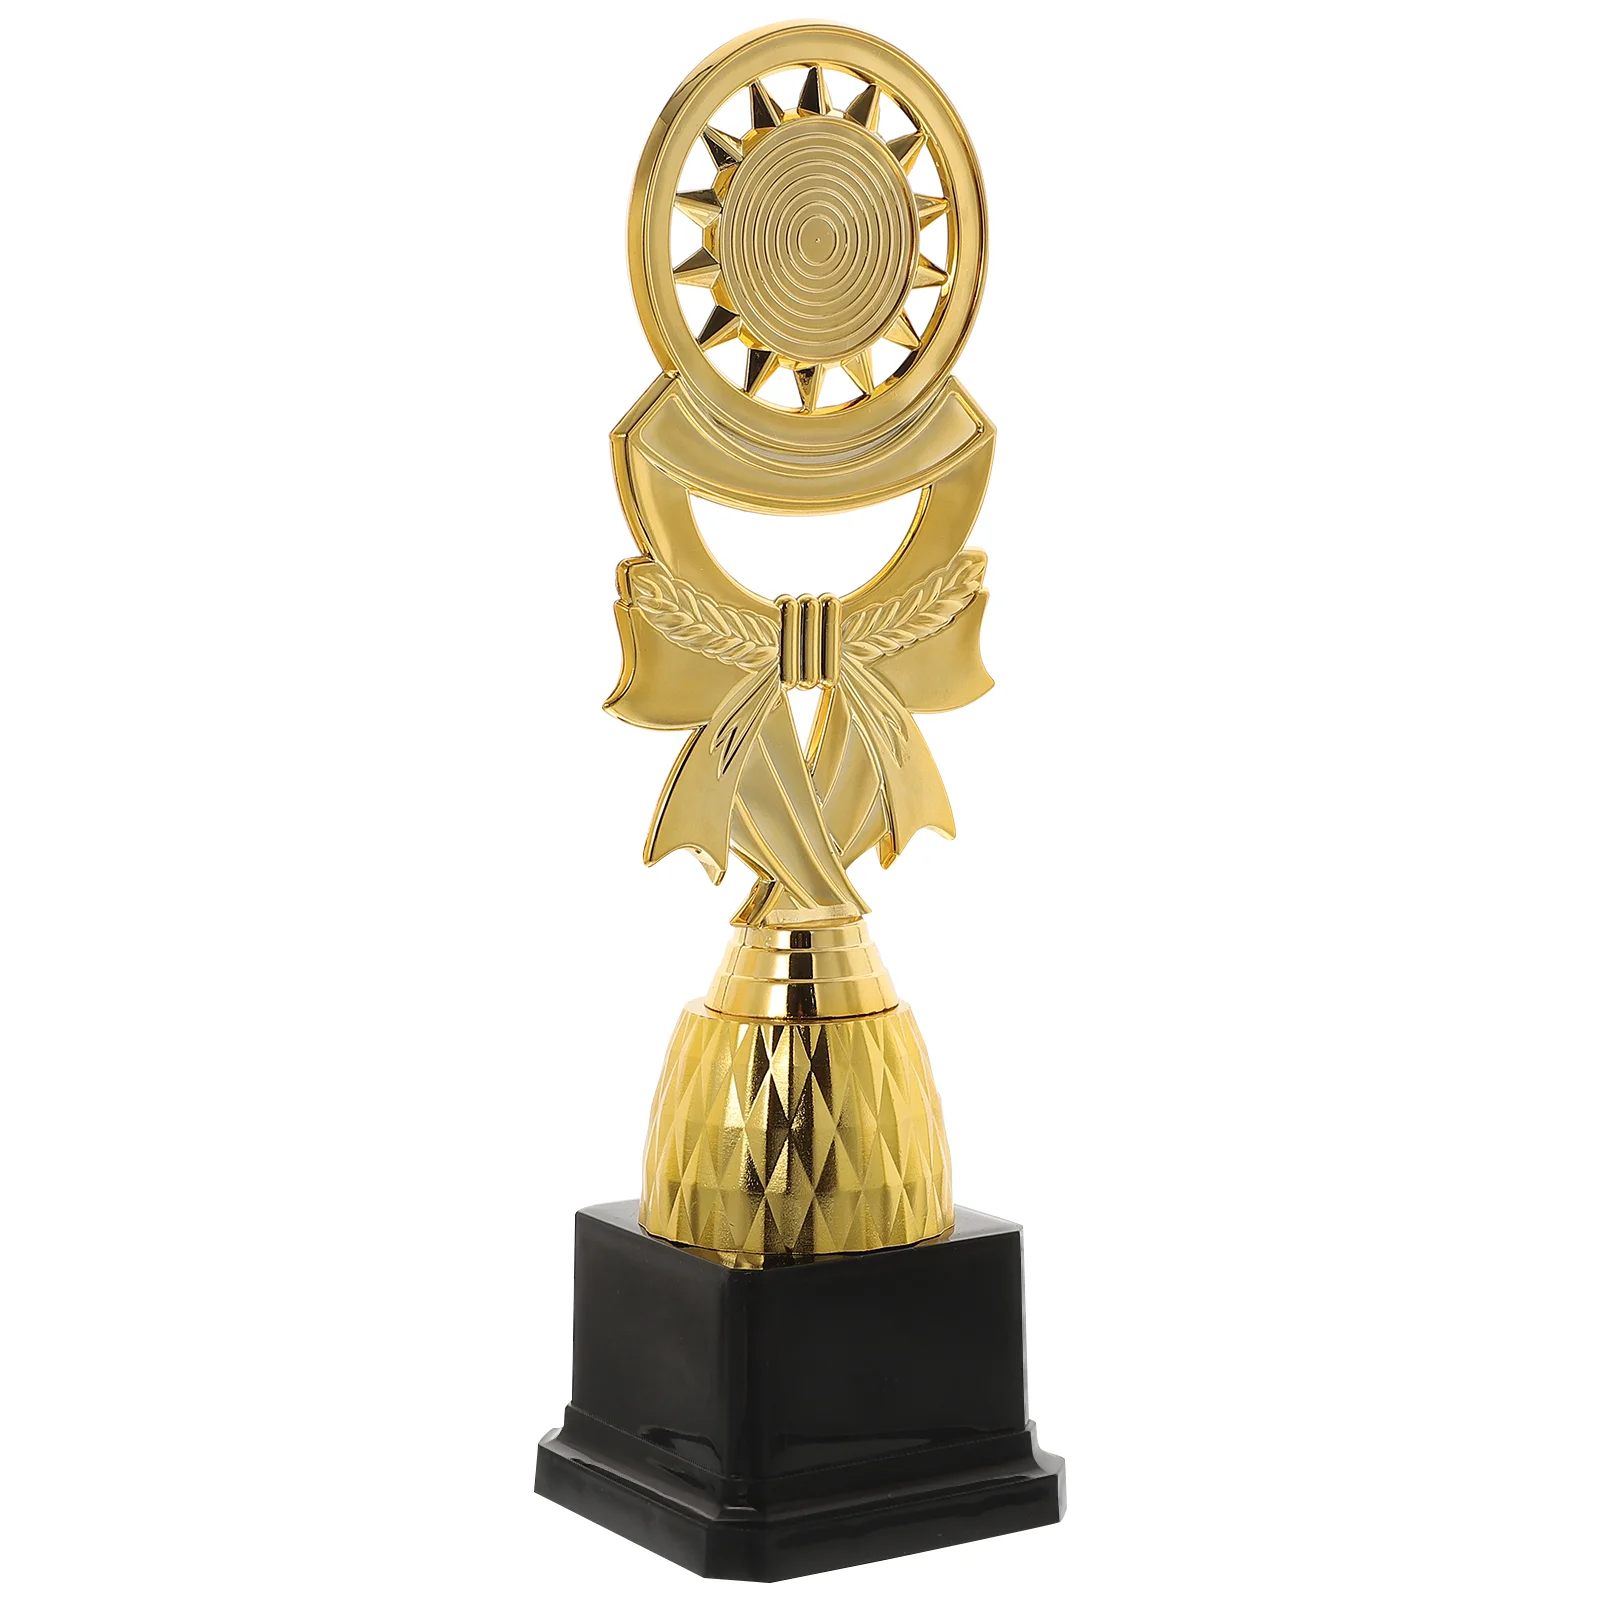 

Golden Award Trophy Model Plastic Reward Prizes Medals Sports Game Winner Souvenir Competition Cups Children Toys